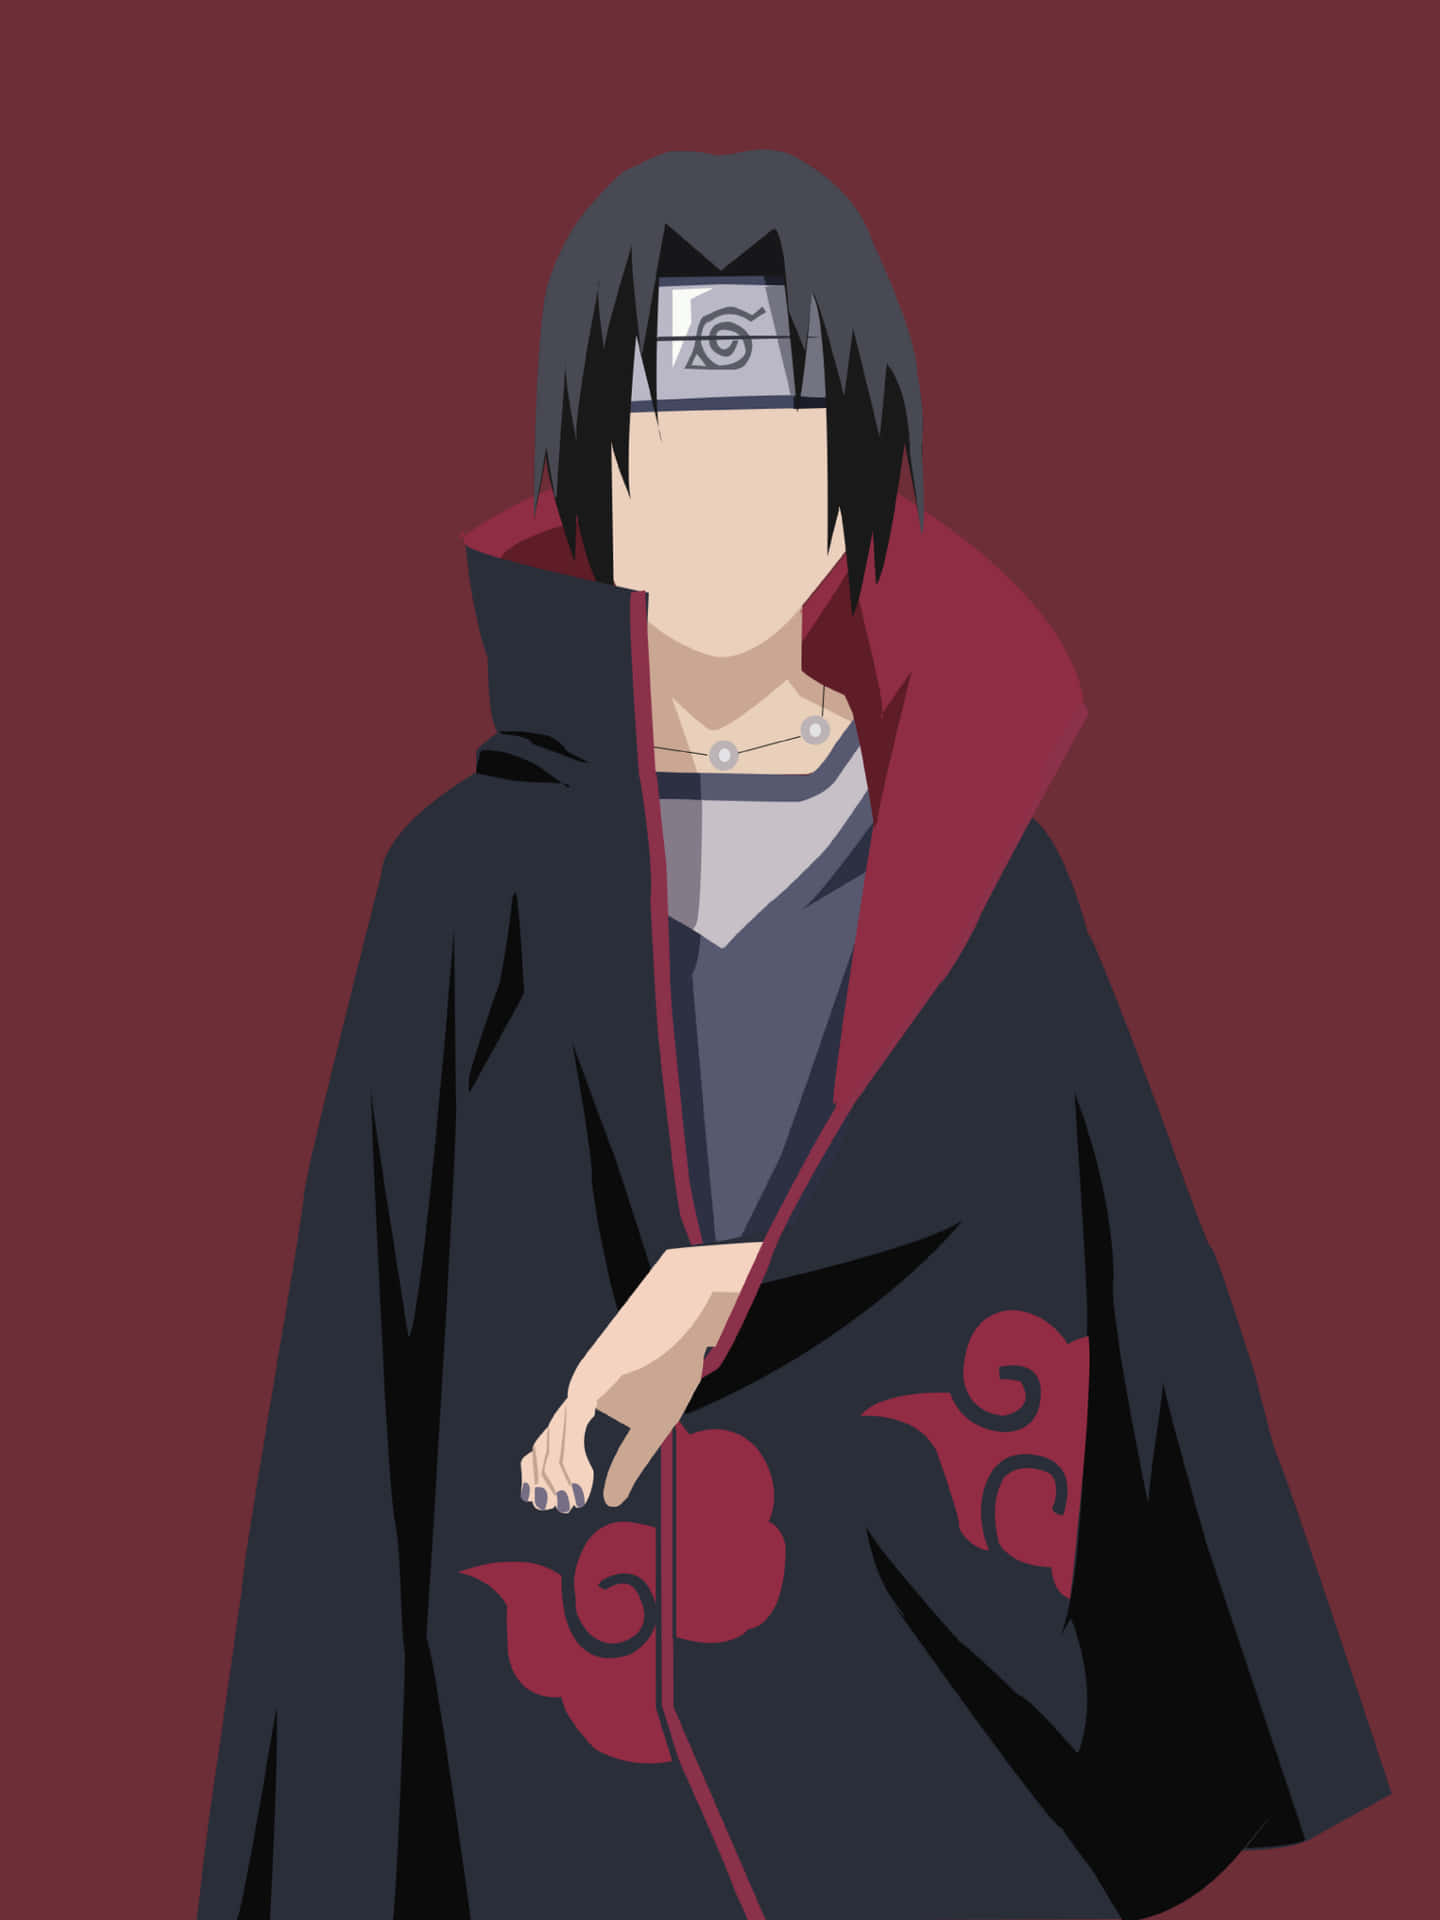 Naruto Minimalist [wallpaper] Background